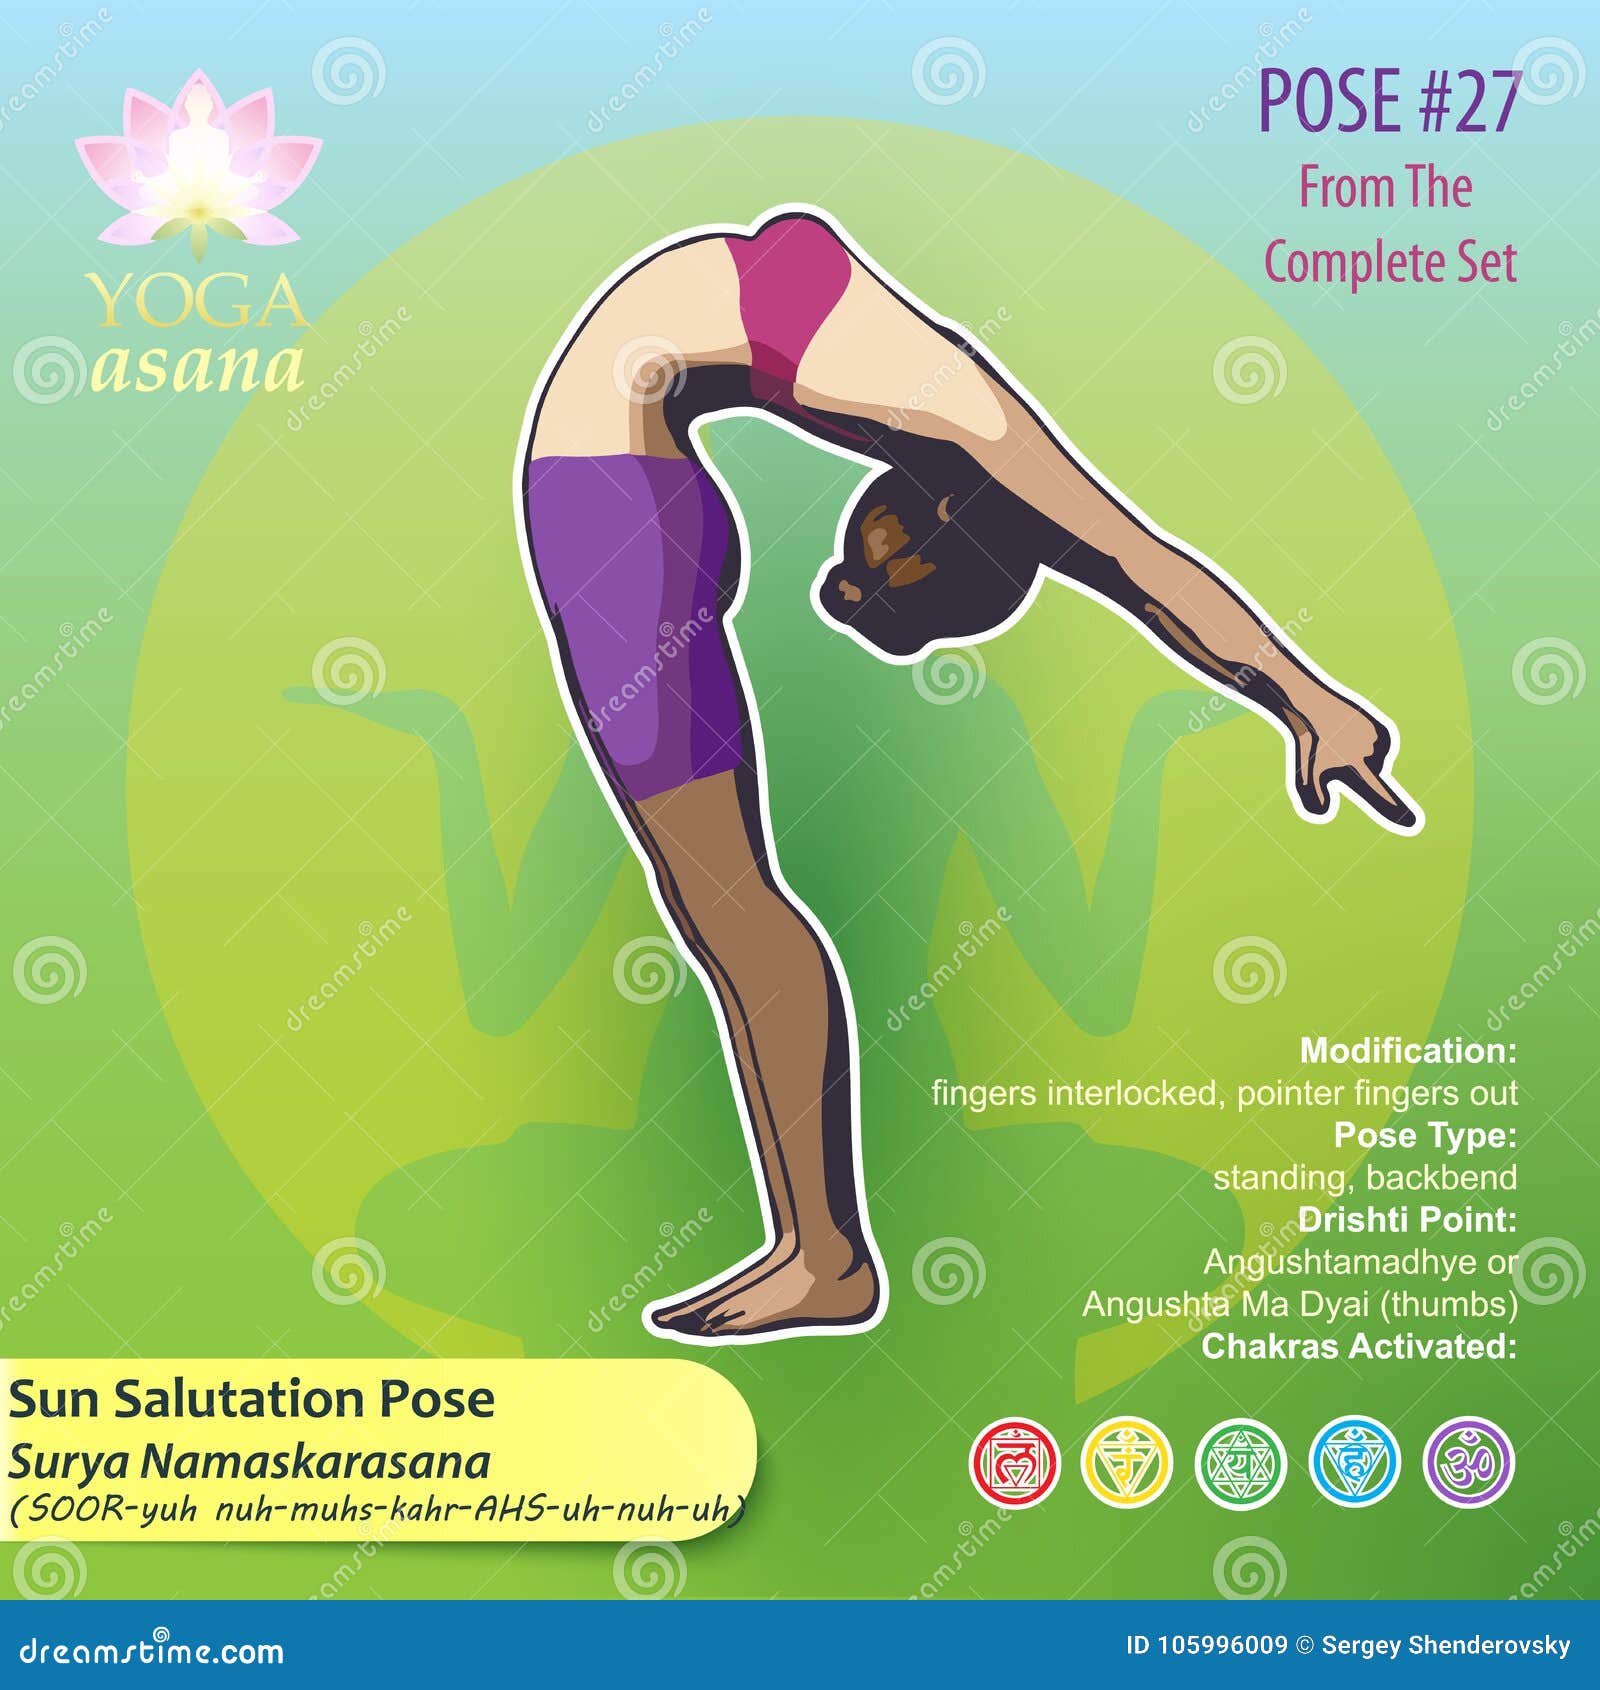 Diya Yoga - Yoga Consciousness - 15 Yoga Poses to Help Reduce Stress and  Tension (Click on image for full size view) #Yoga #Asanas #Poses #Health  #DiyaYoga | Facebook